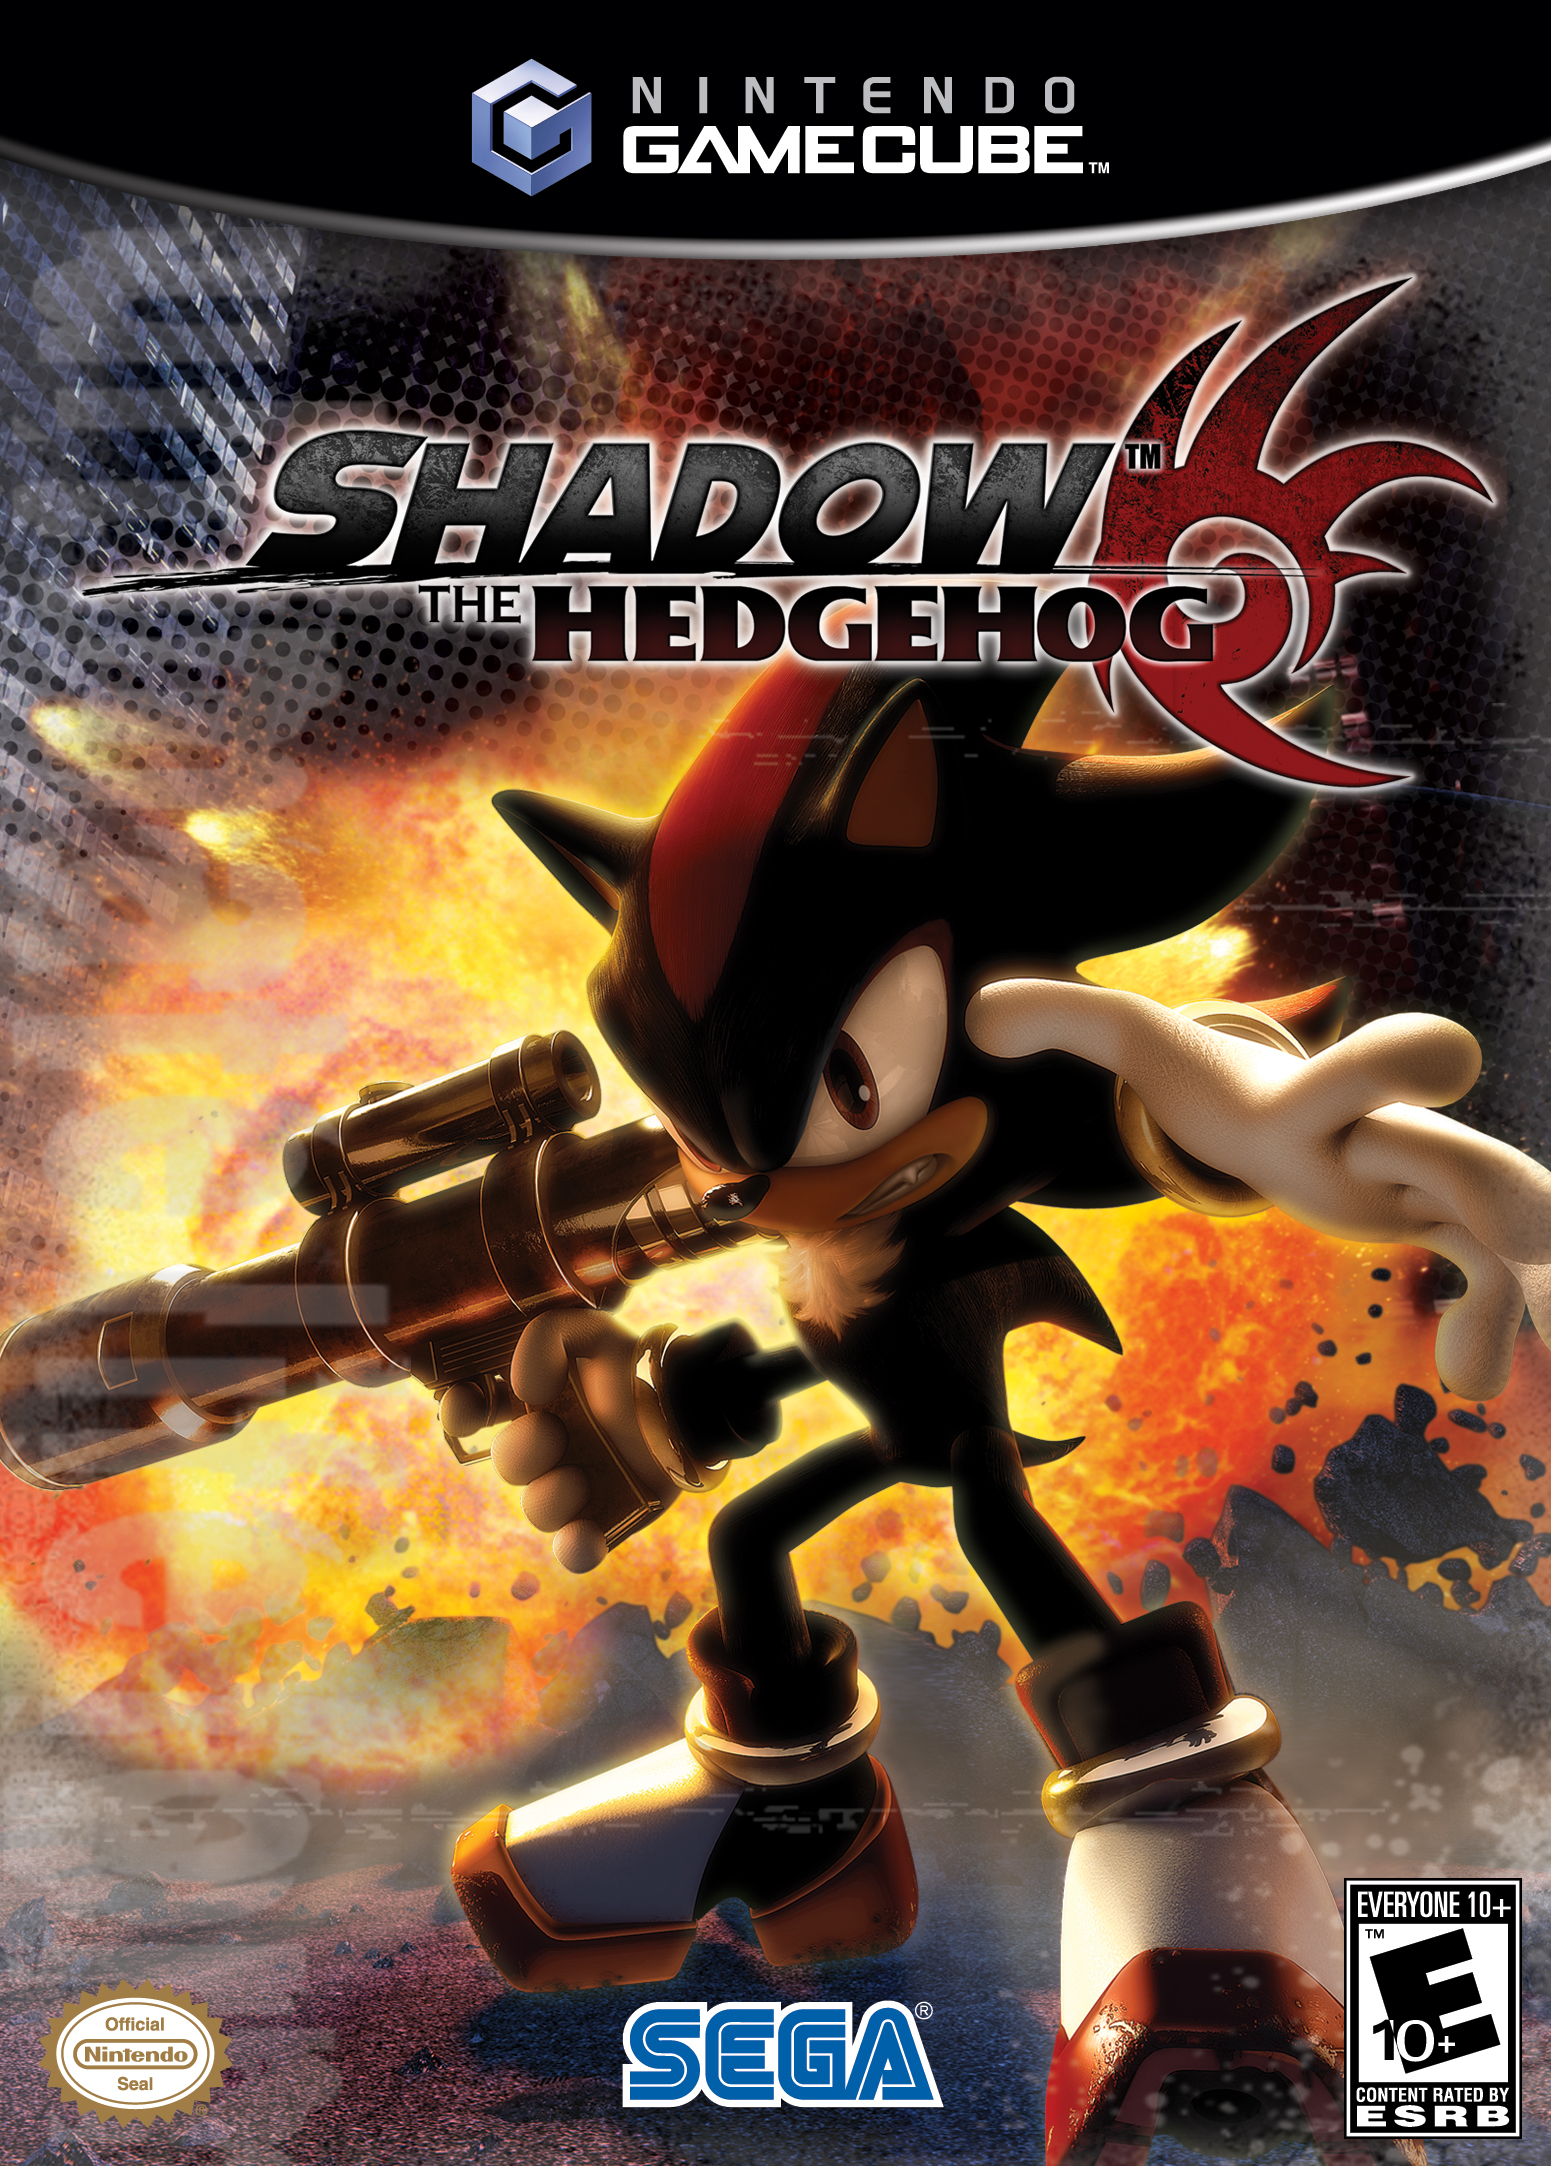 ow the edge shadow the hedgehog